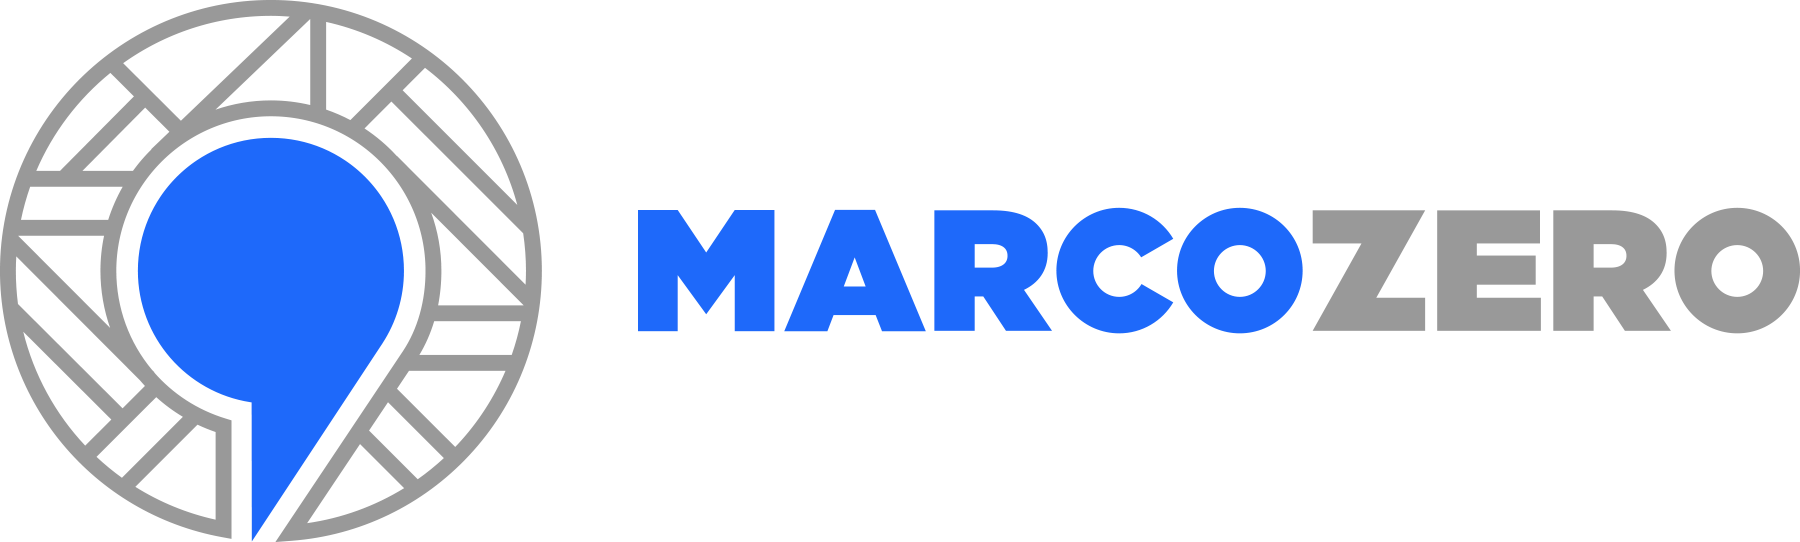 MARCOZERO Logo